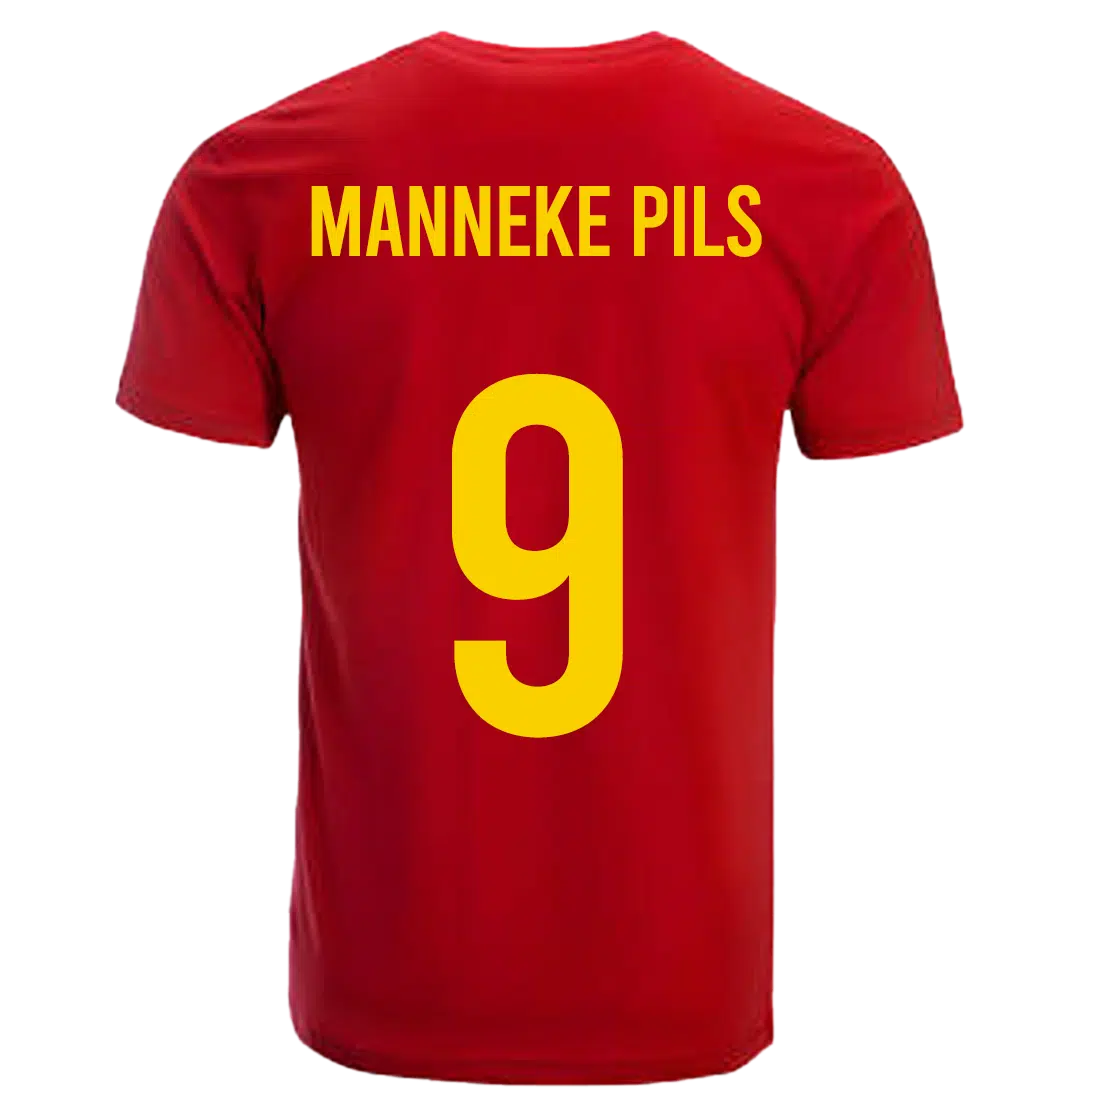 Manneke Pils Belgie shirt achterkant